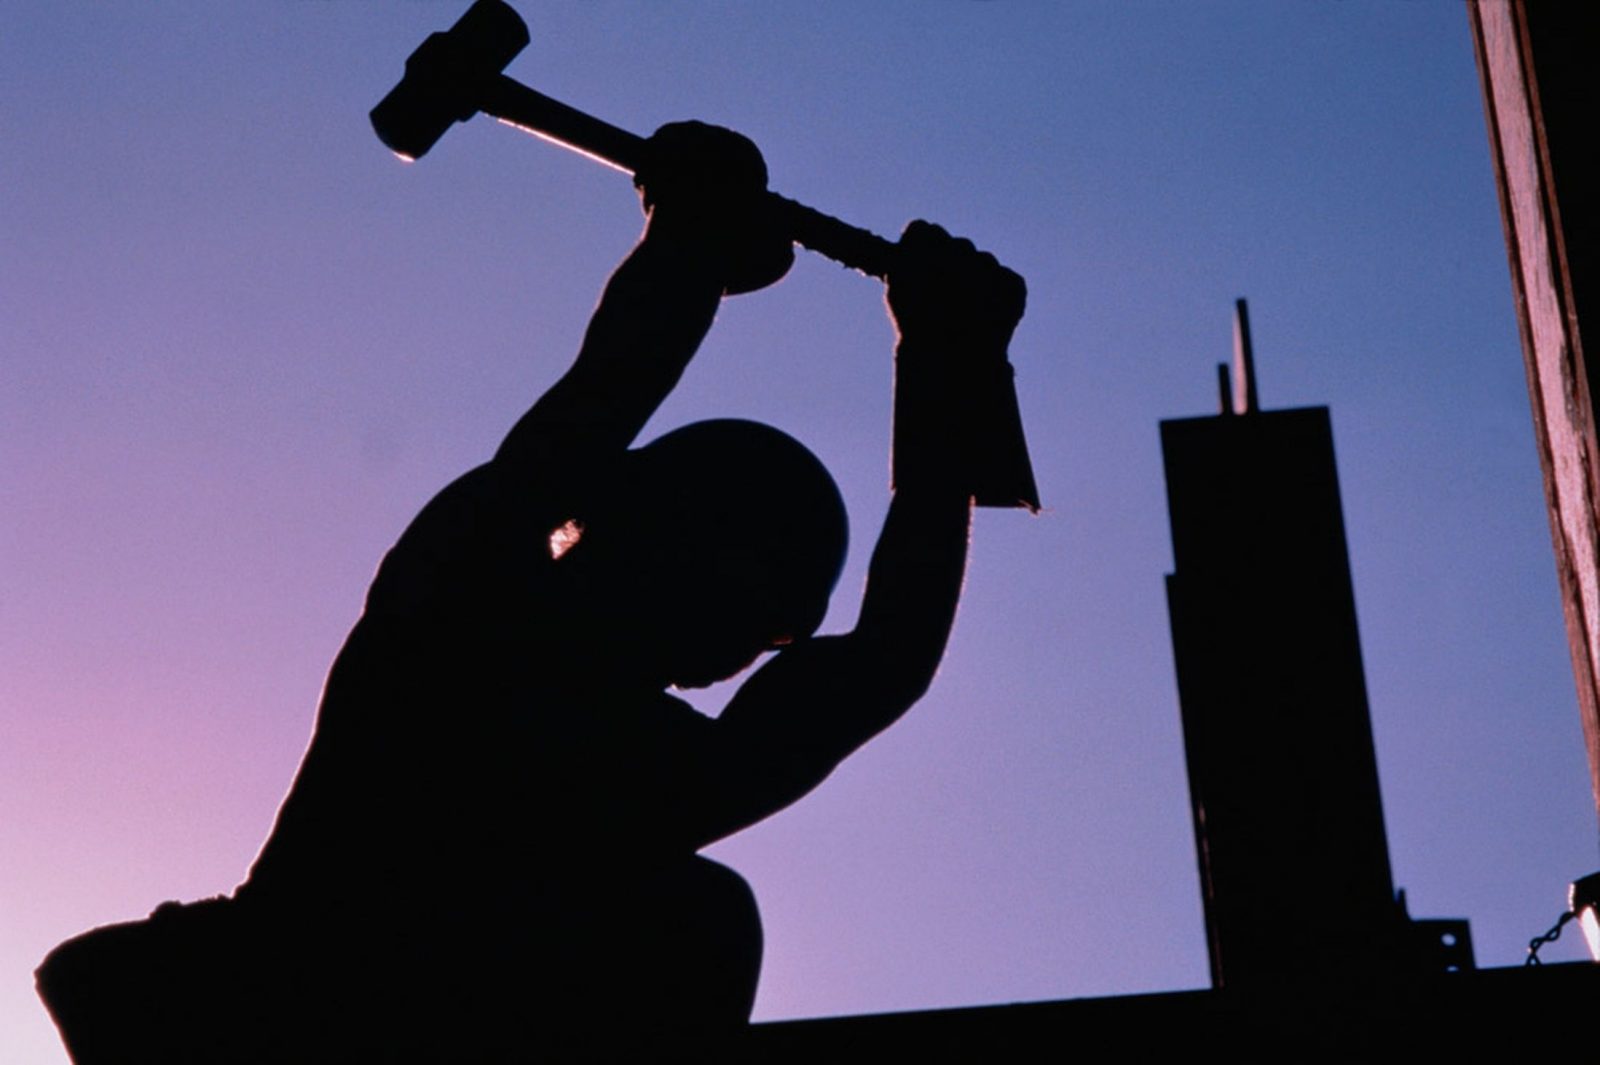 Construction worker using sledgehammer, silhouette